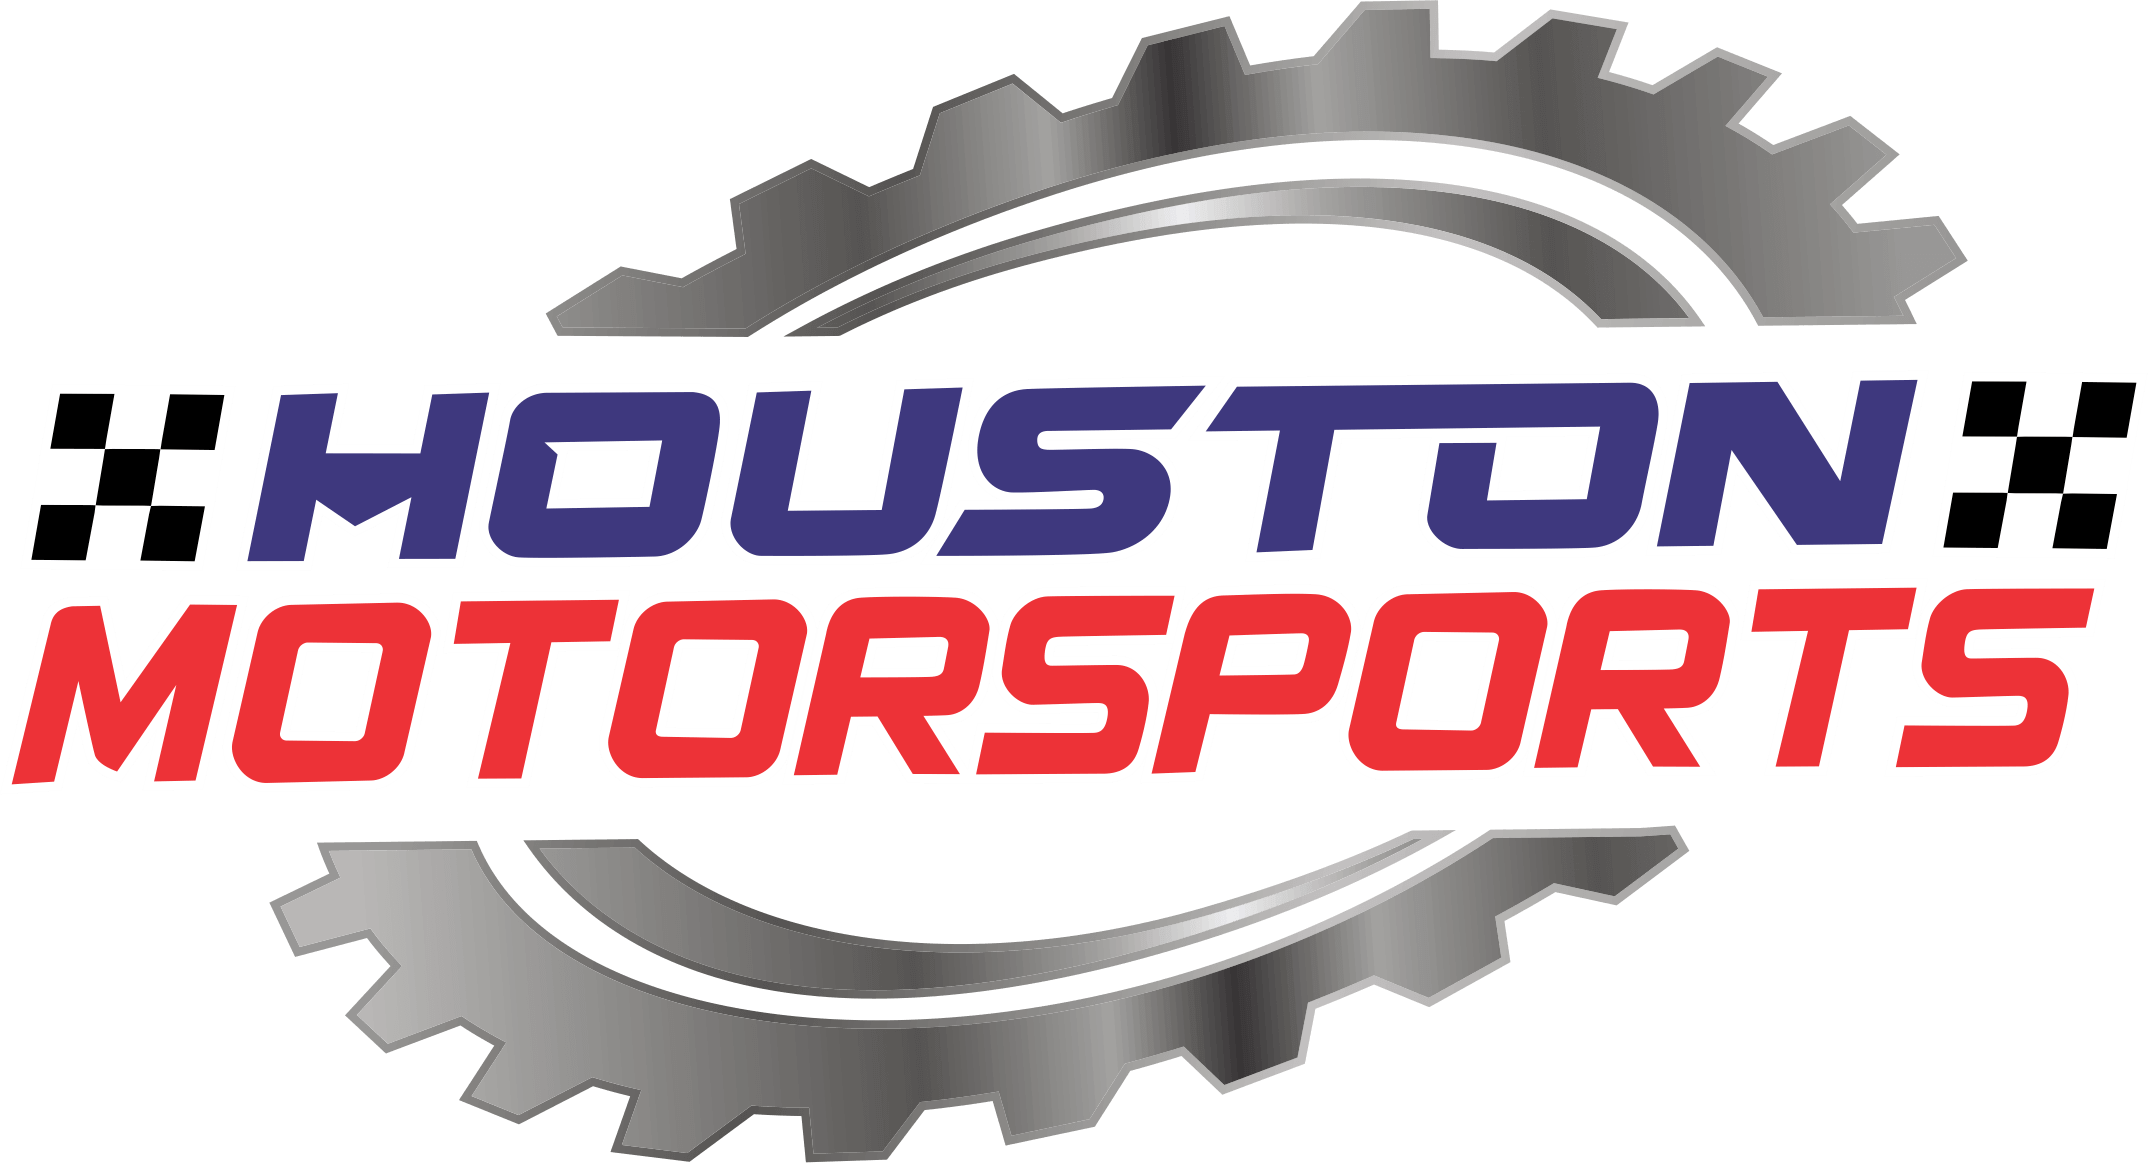 Houston Motorsports